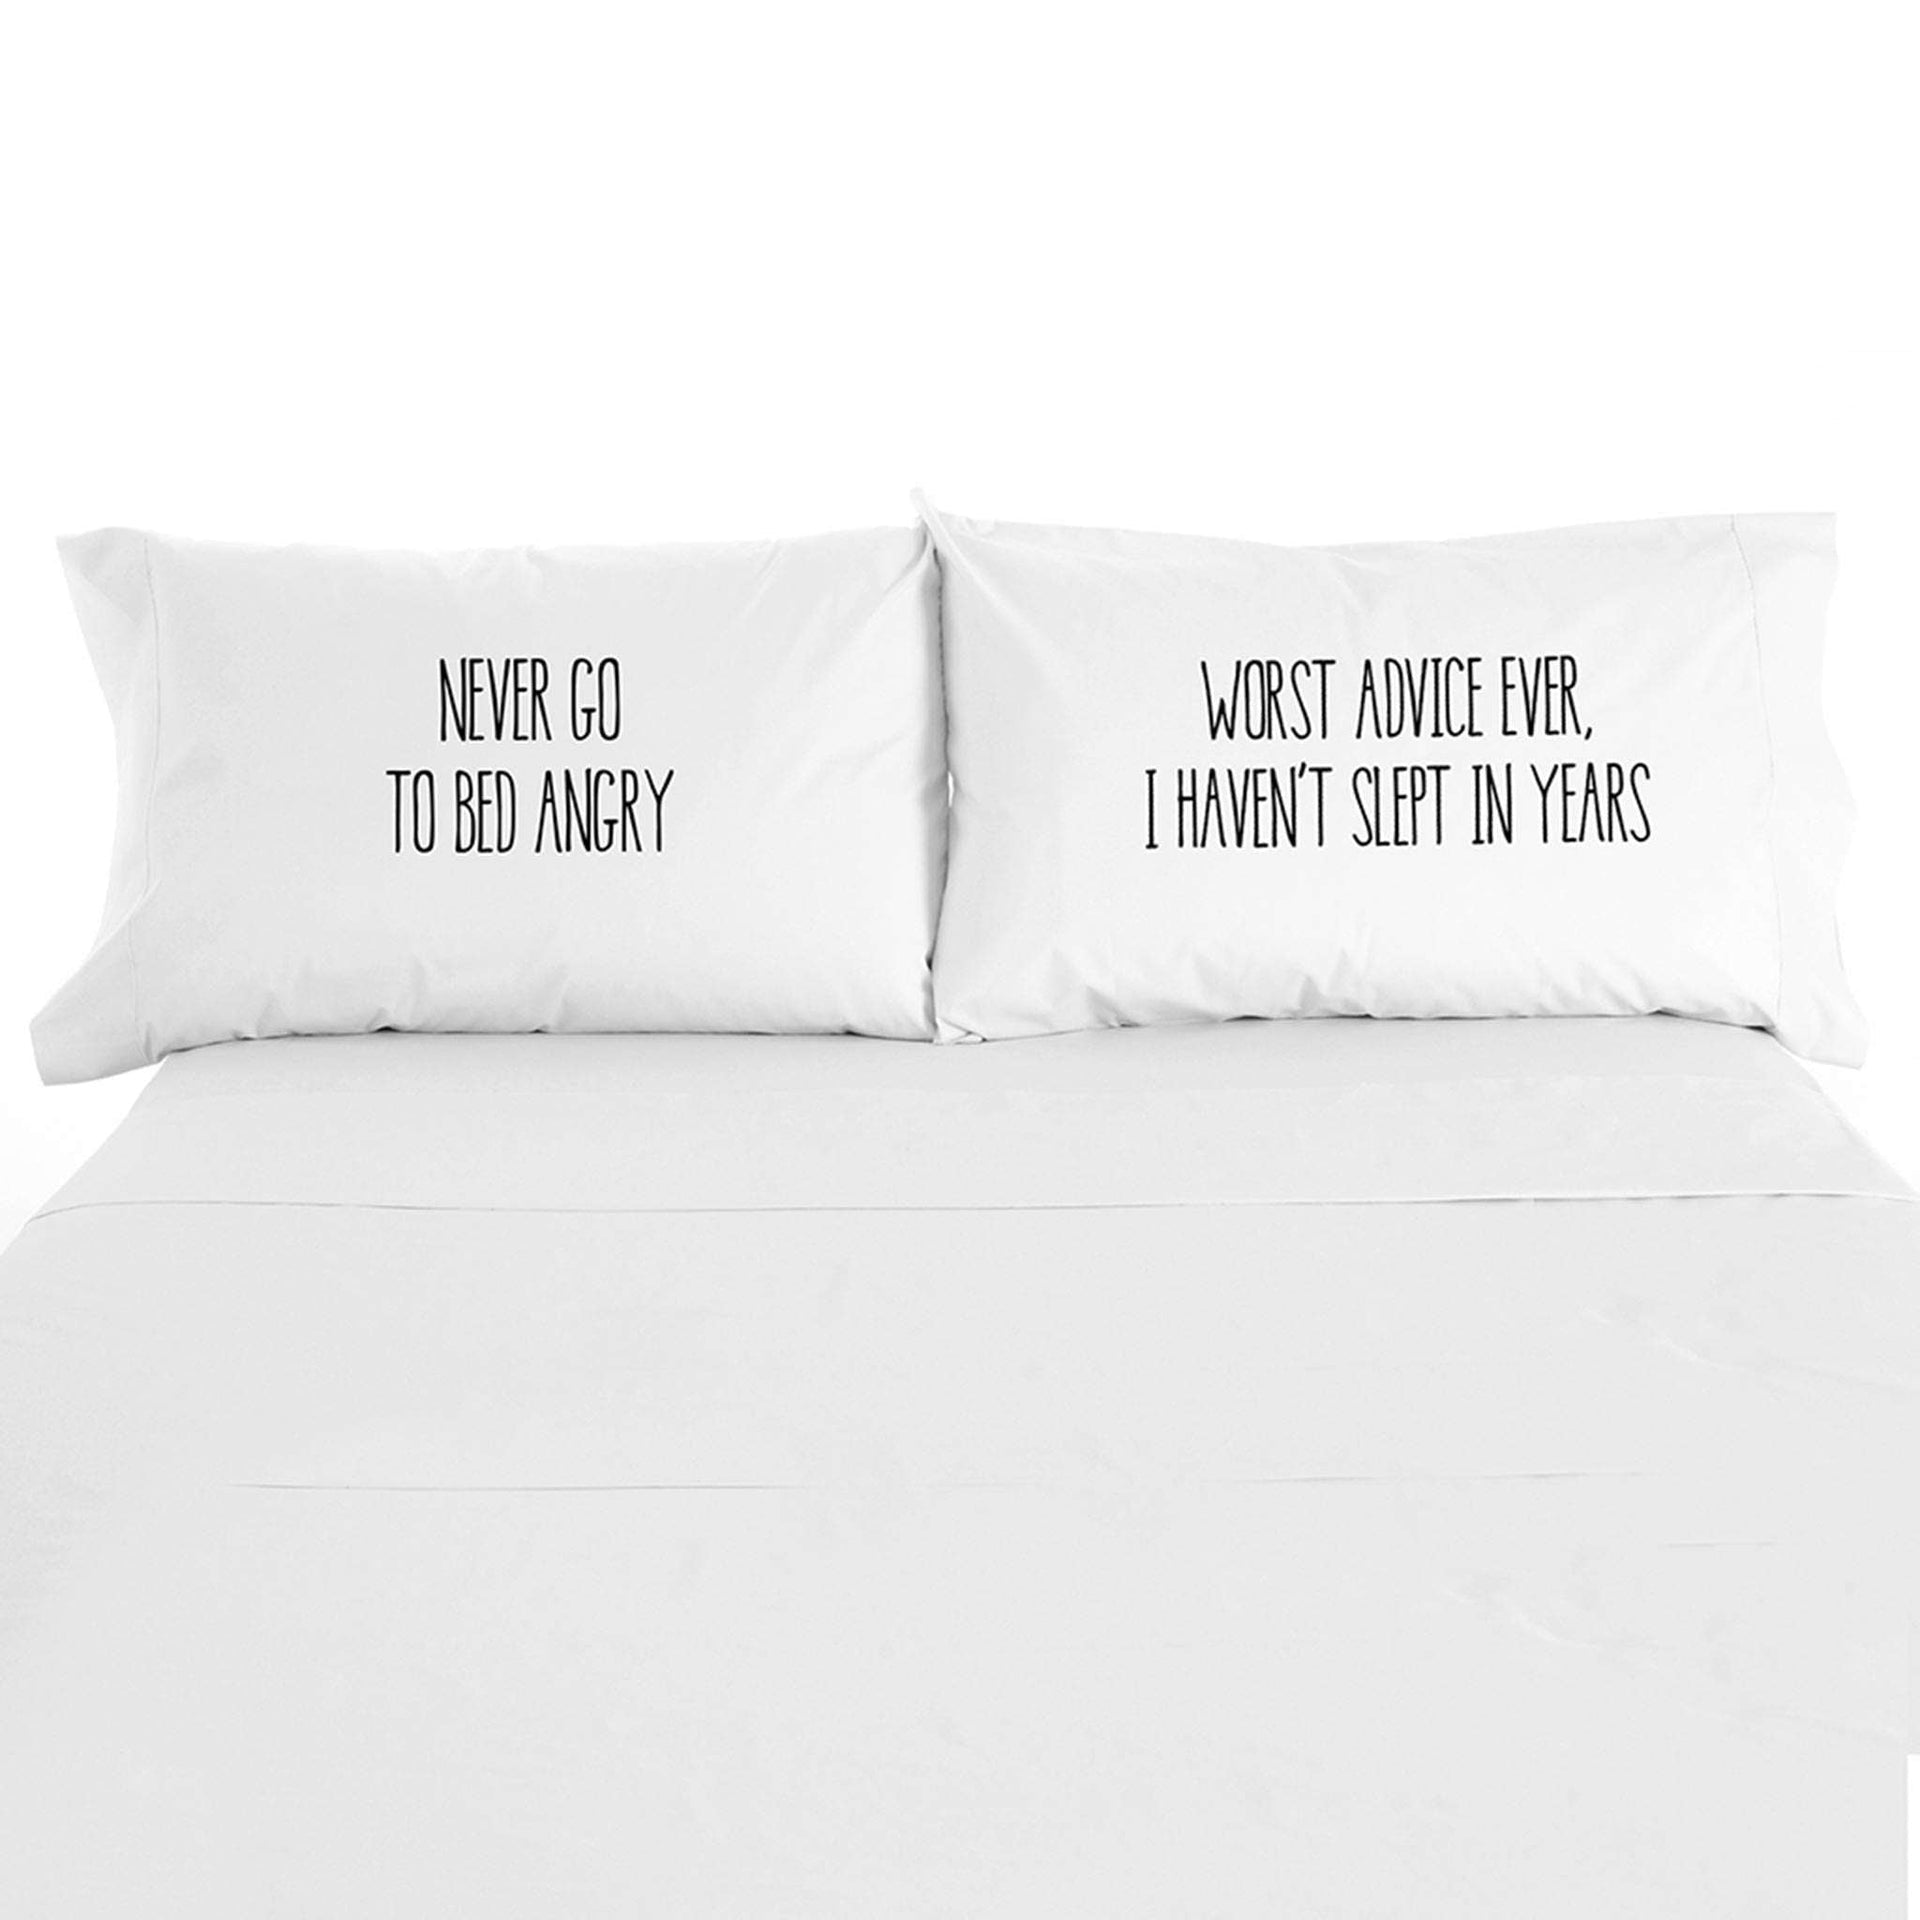 Never Go to bed angry humorous saying custom printed on pillowcase set.